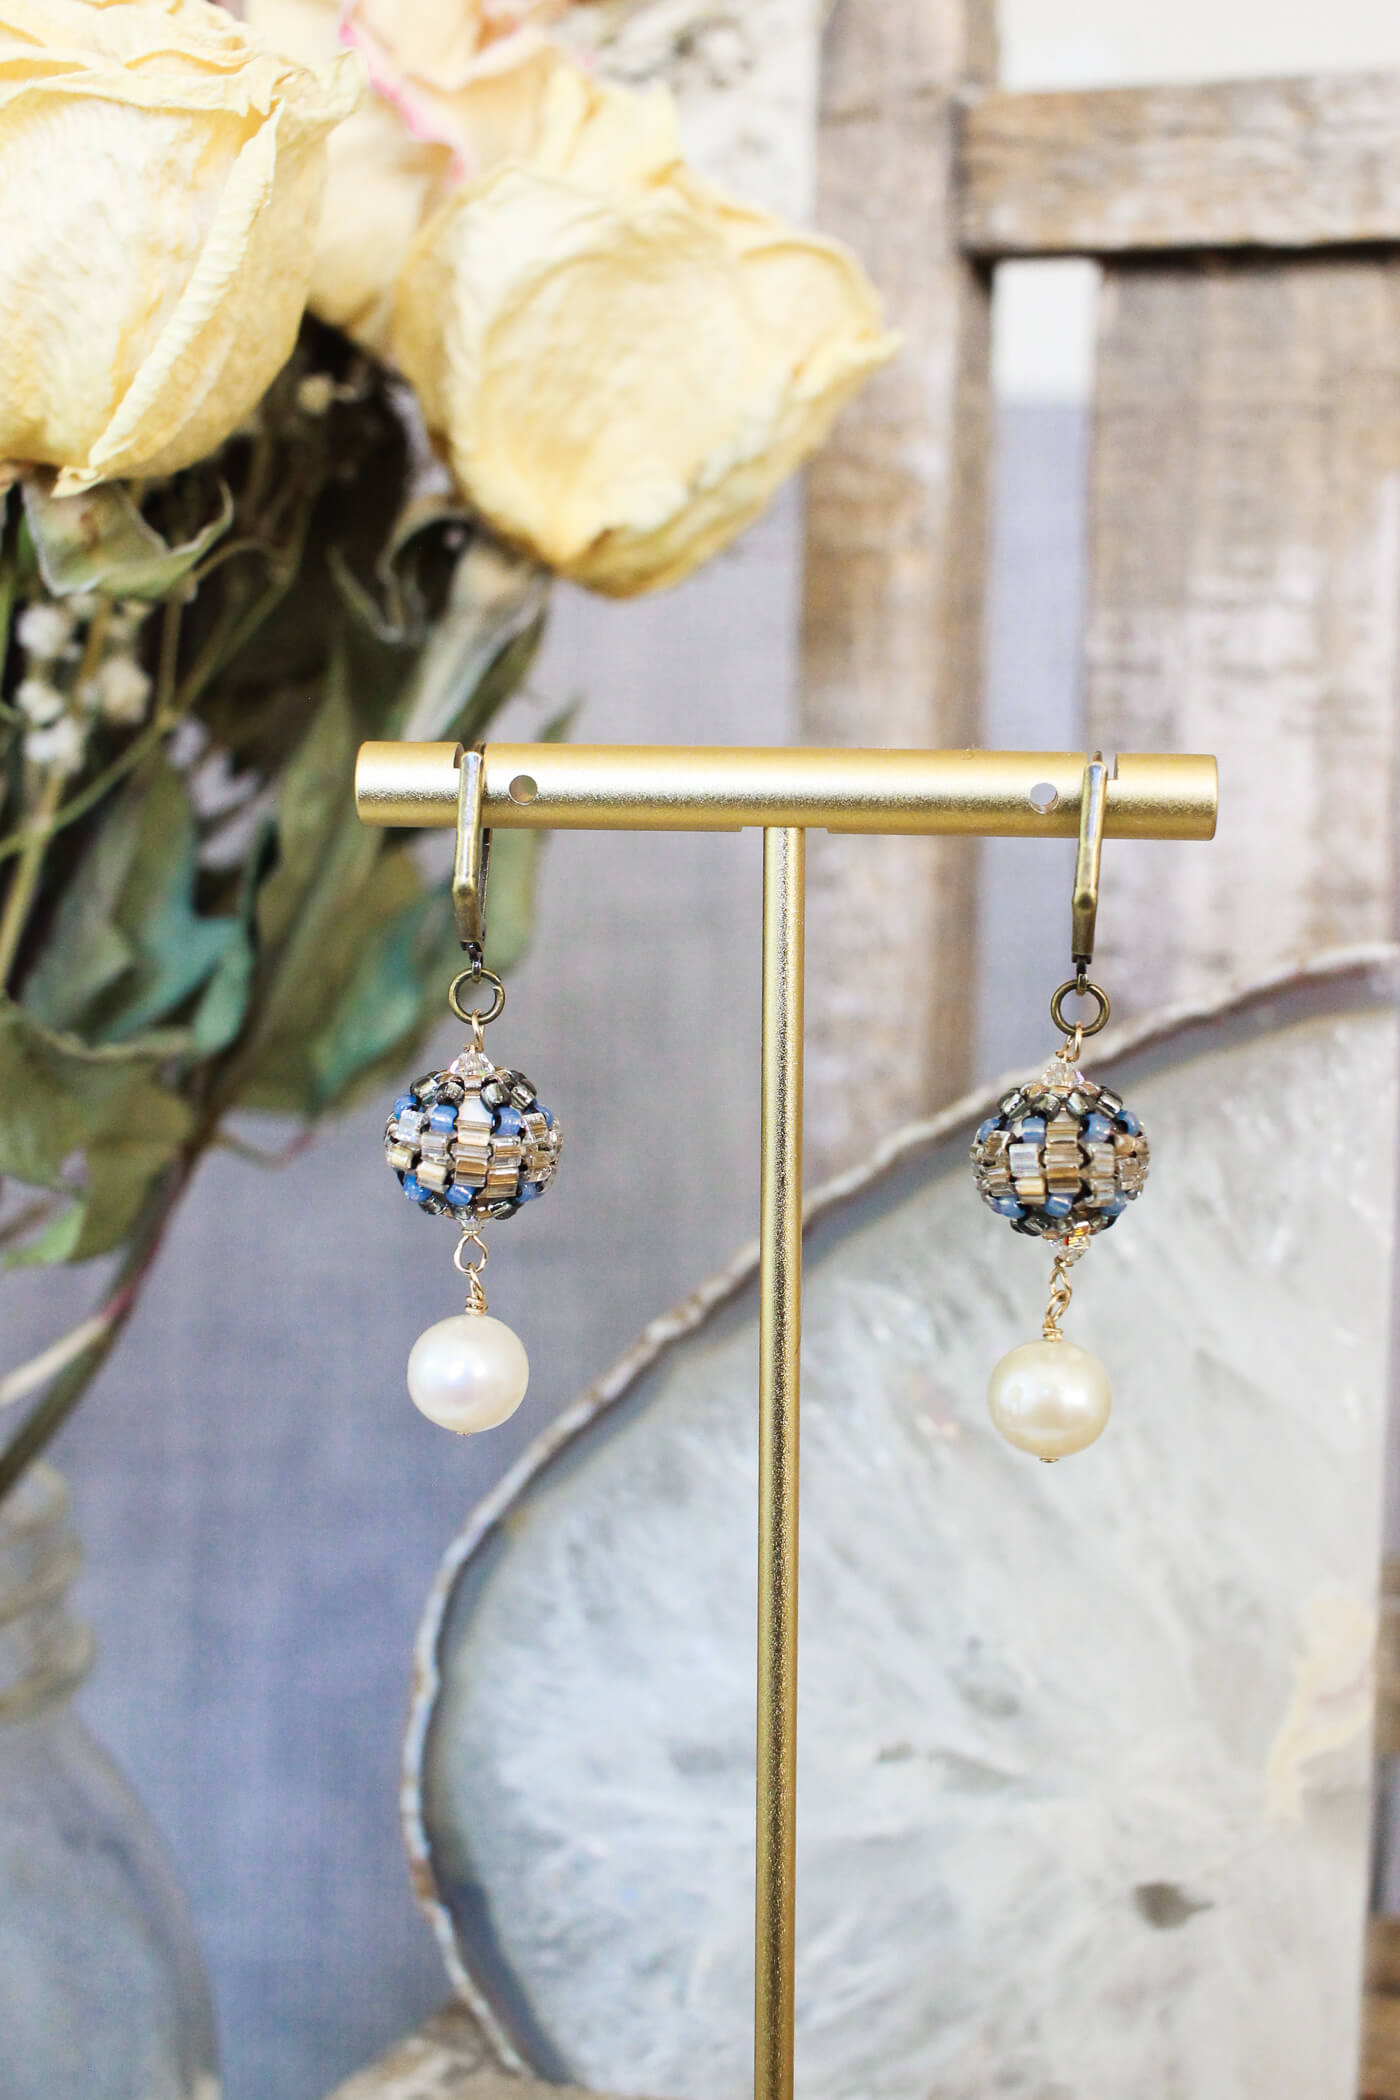 Korea New Design Fashion Jewelry Simple White Pearl Hook Metal Bead Earrings  Elegant Women's Daily Work Accessories